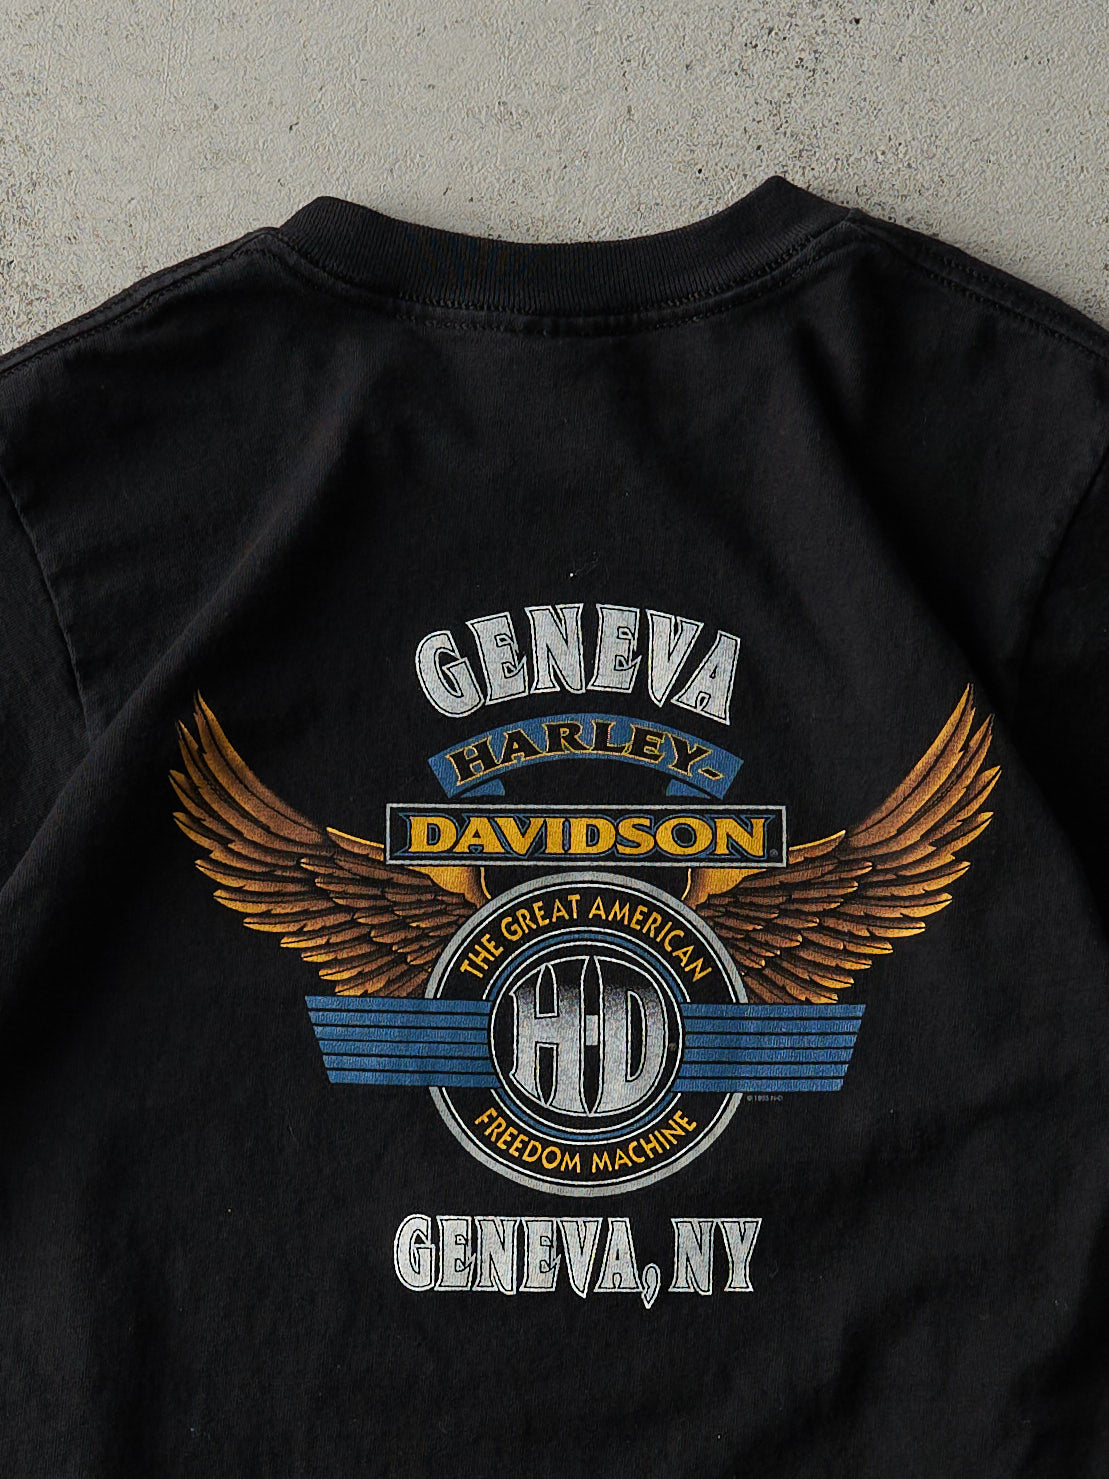 Vintage 95' Black Geneva New York Harley Davidson Tee (XS)